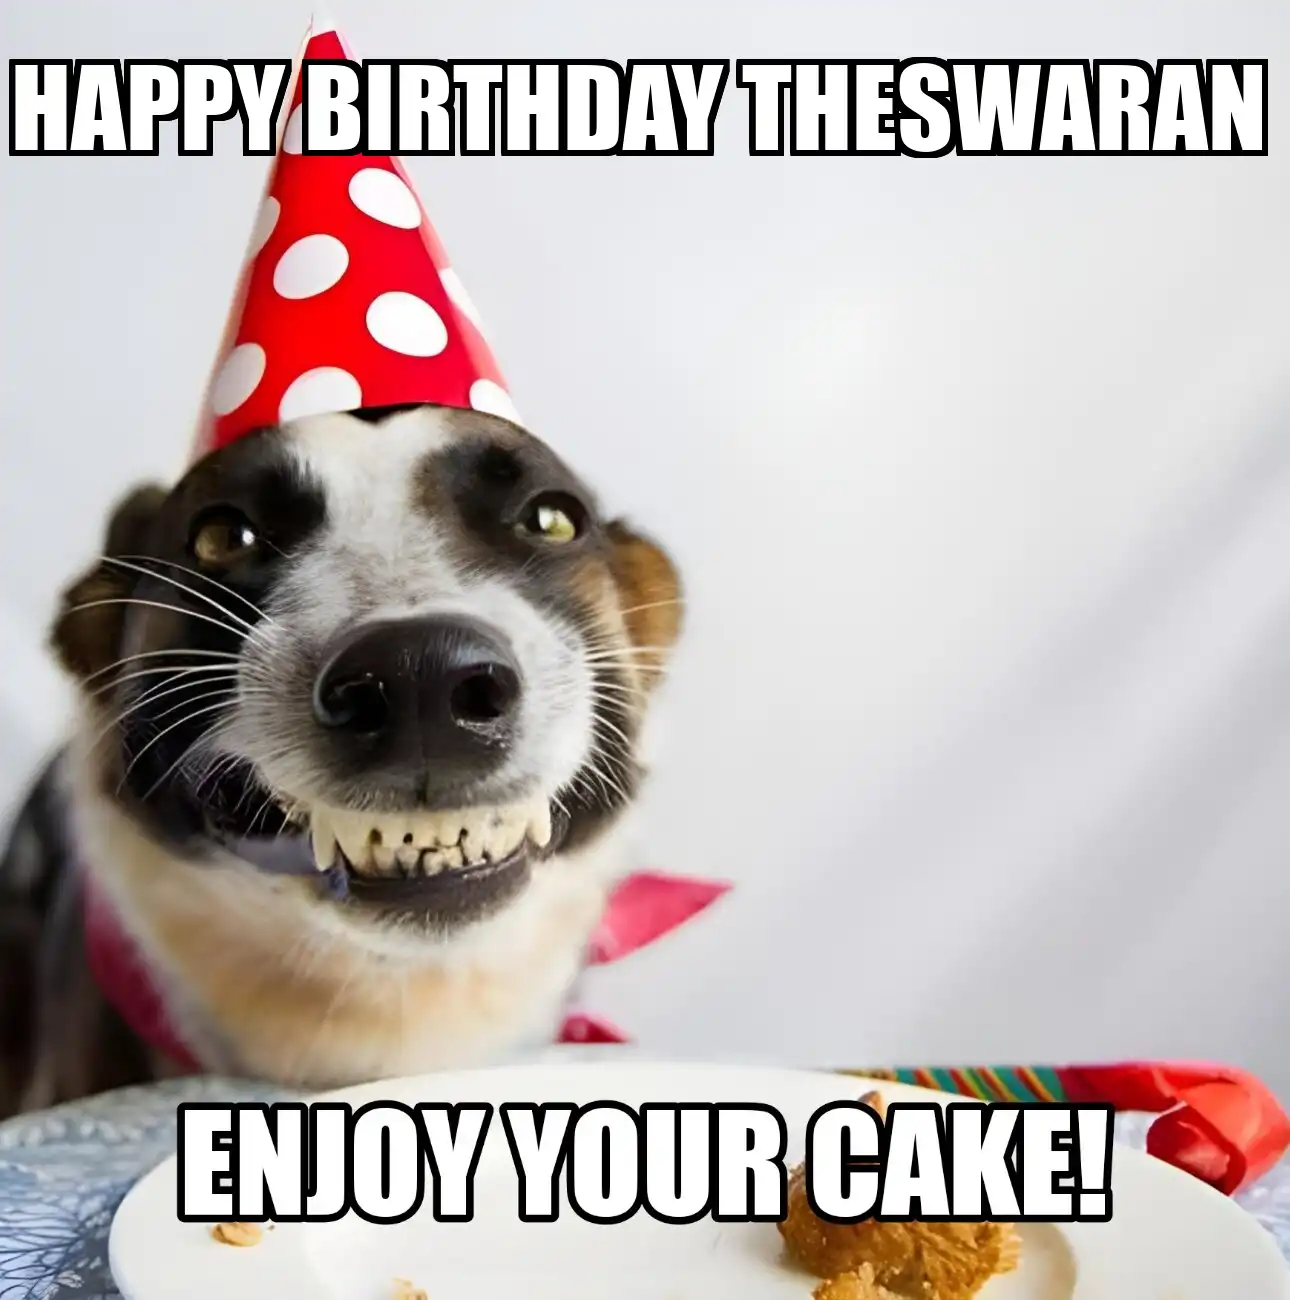 Happy Birthday Theswaran Enjoy Your Cake Dog Meme